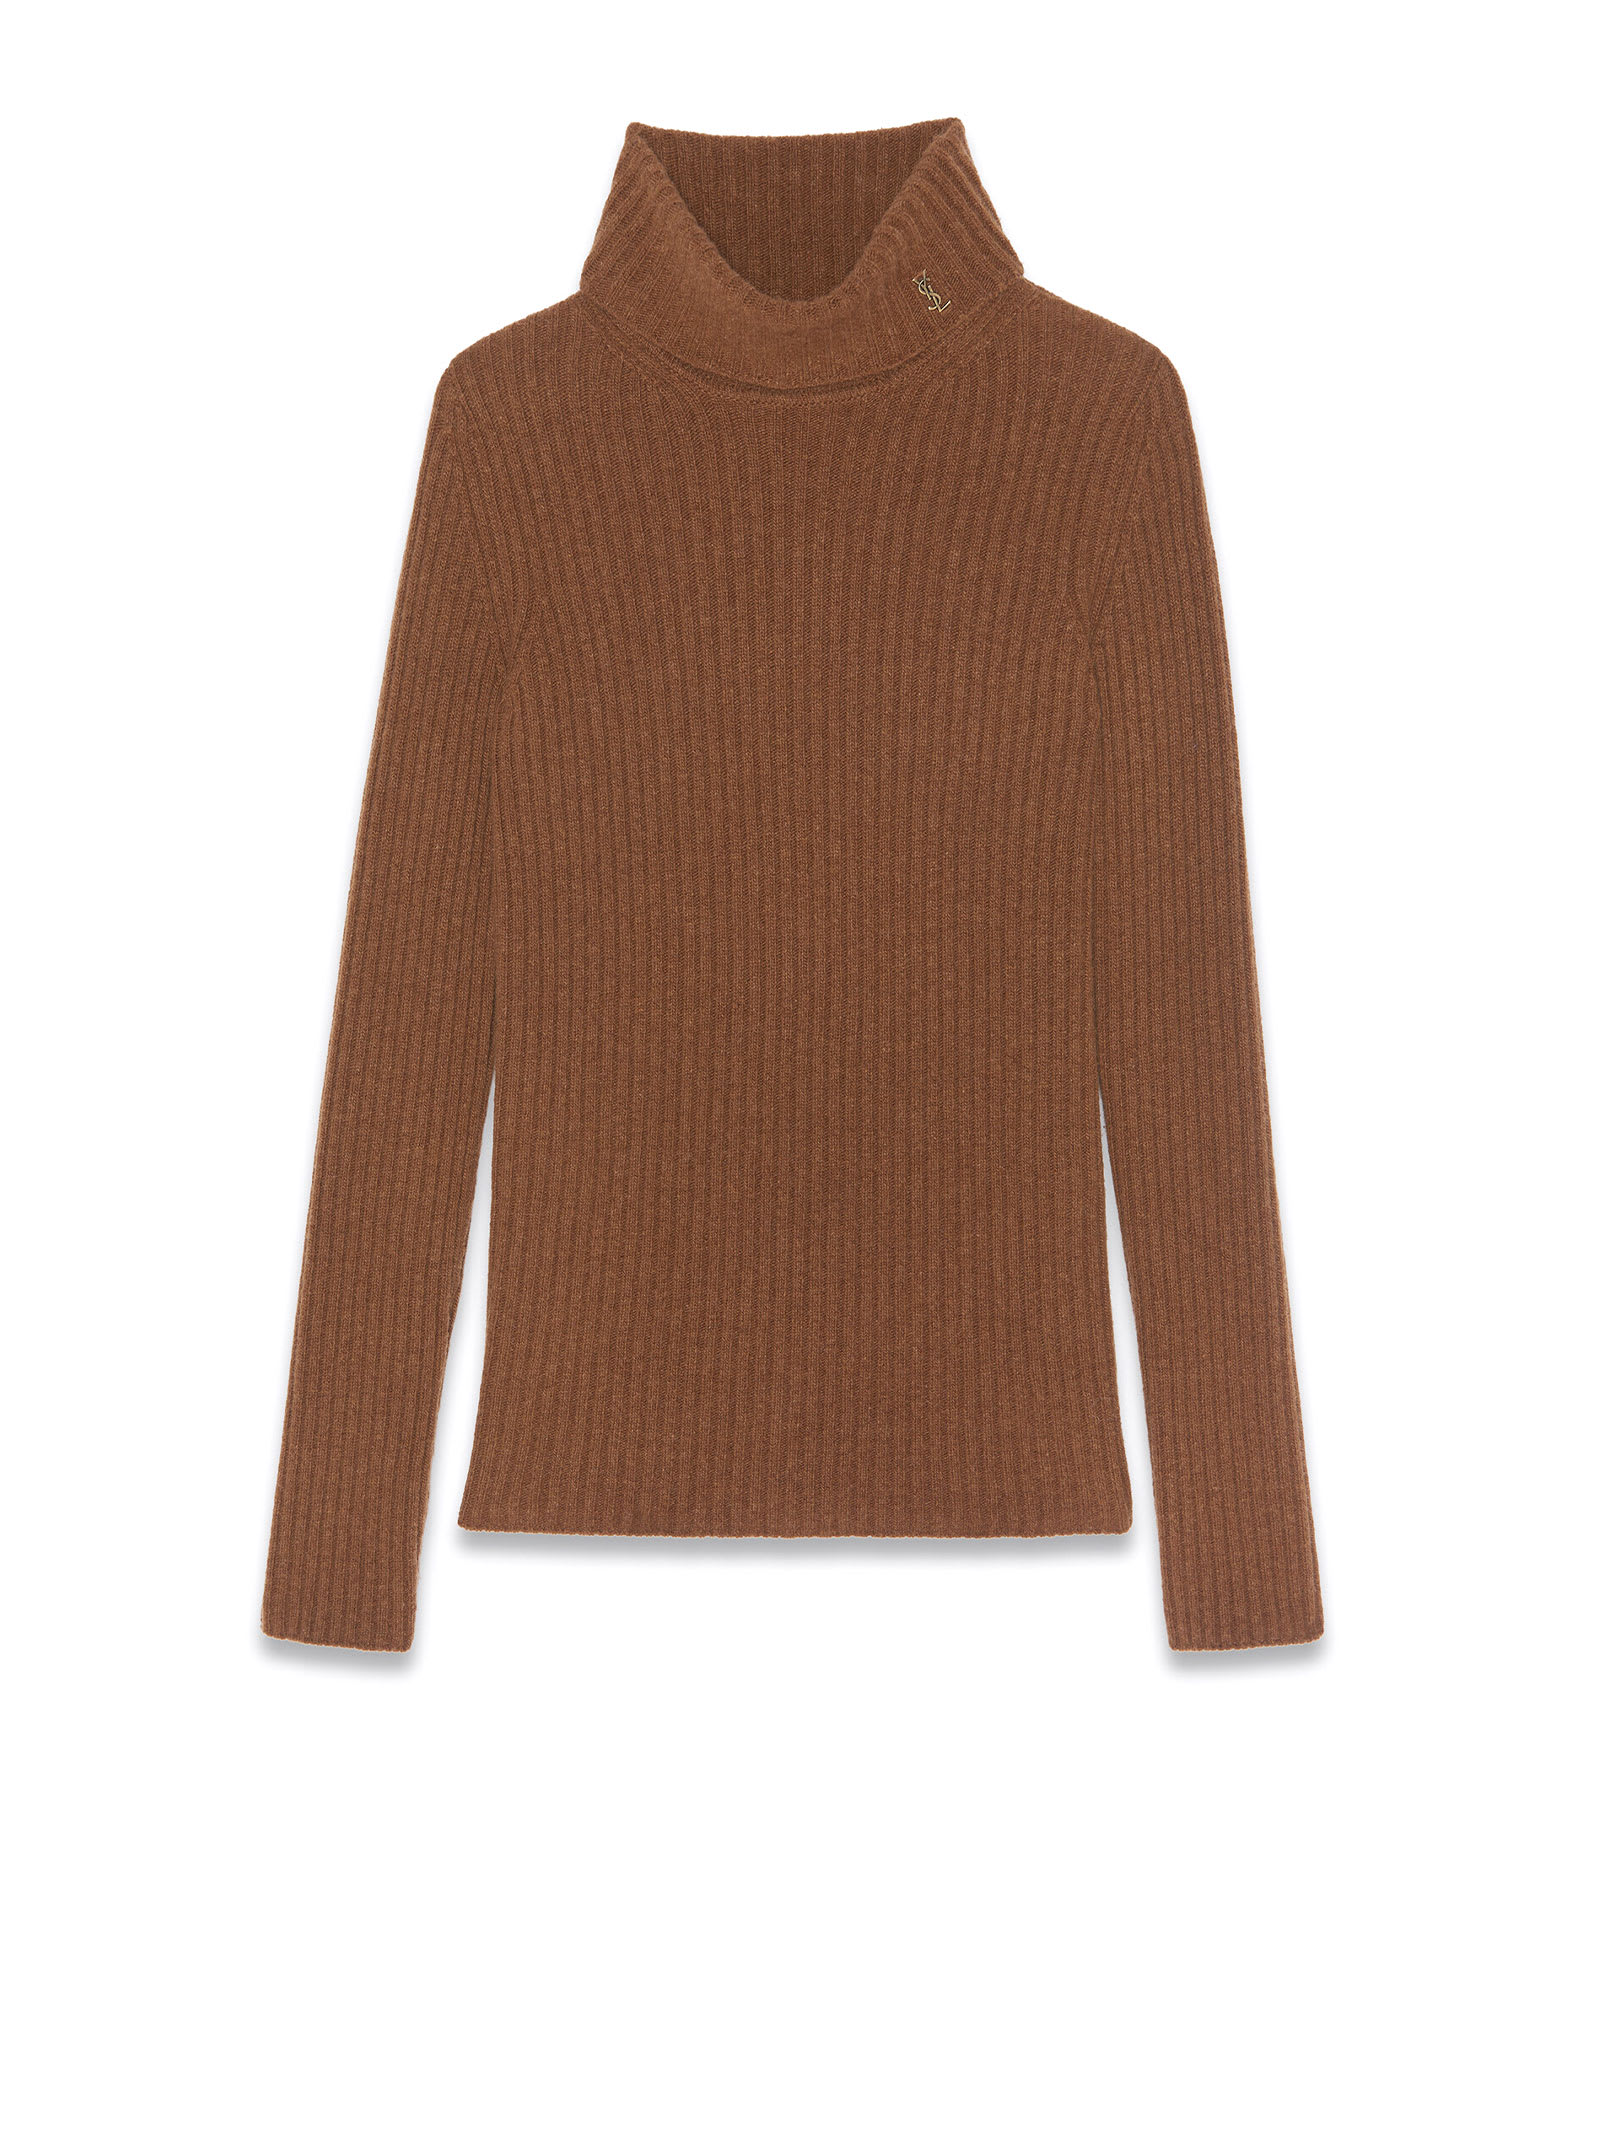 Saint Laurent Sweater In Wool Blend Cashmere